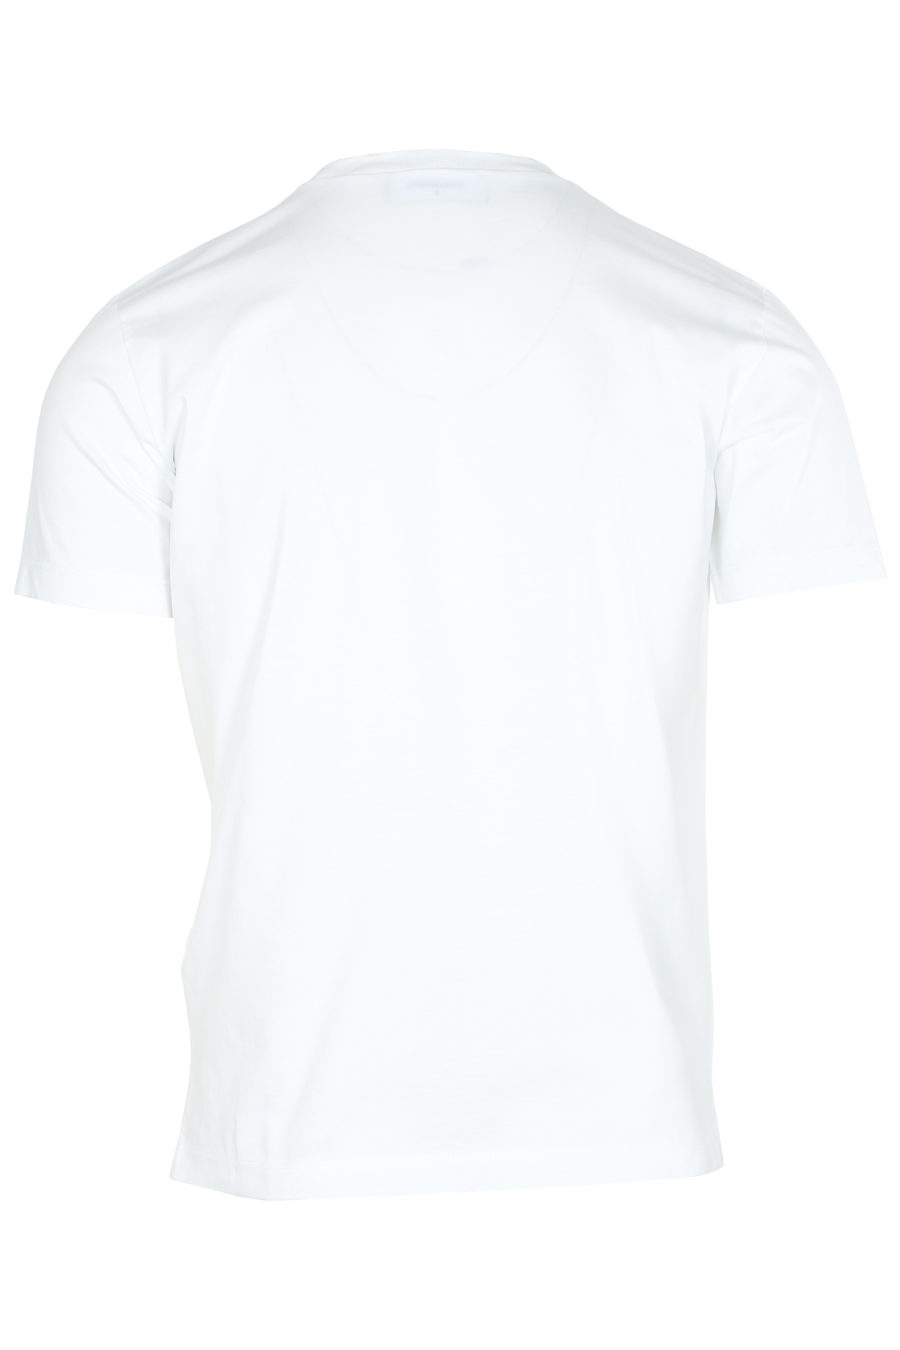 Camiseta blanca con logo dibujado - IMG 6210